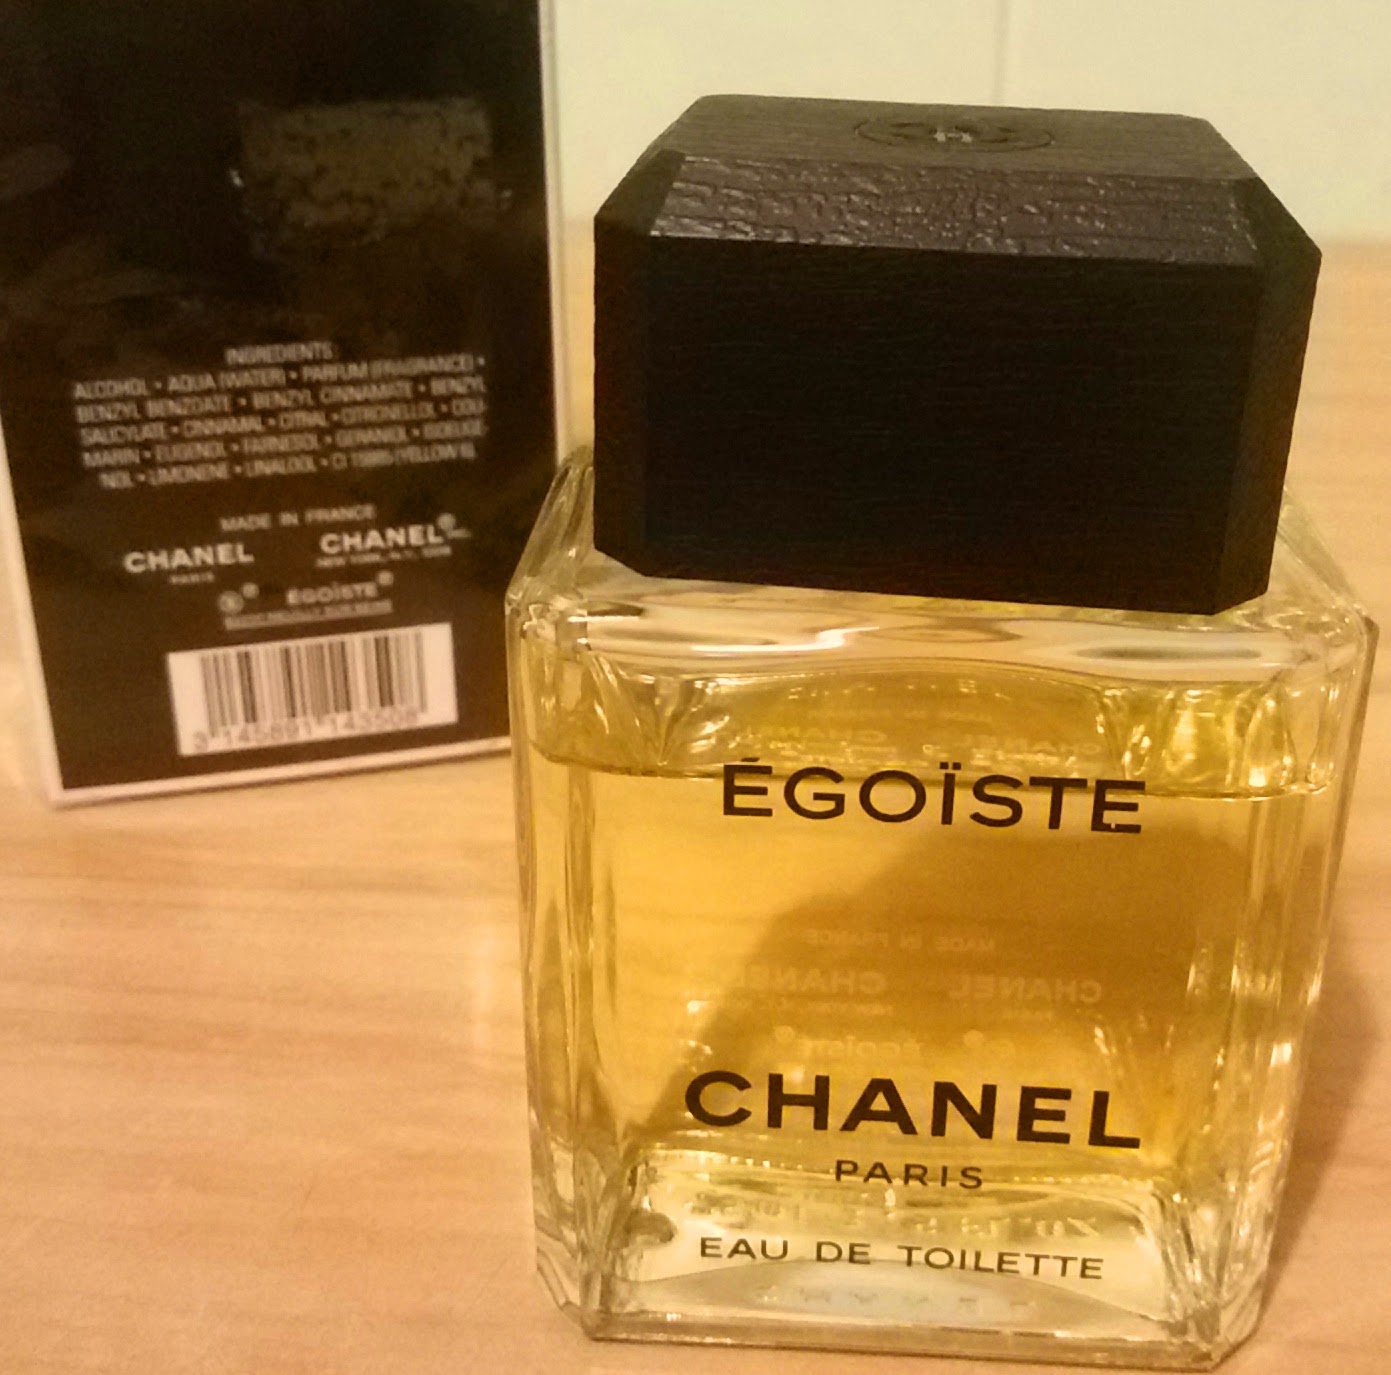 Egoiste Platinum Chanel Edt 100 ml vintage 1993. Sealed – My old perfume